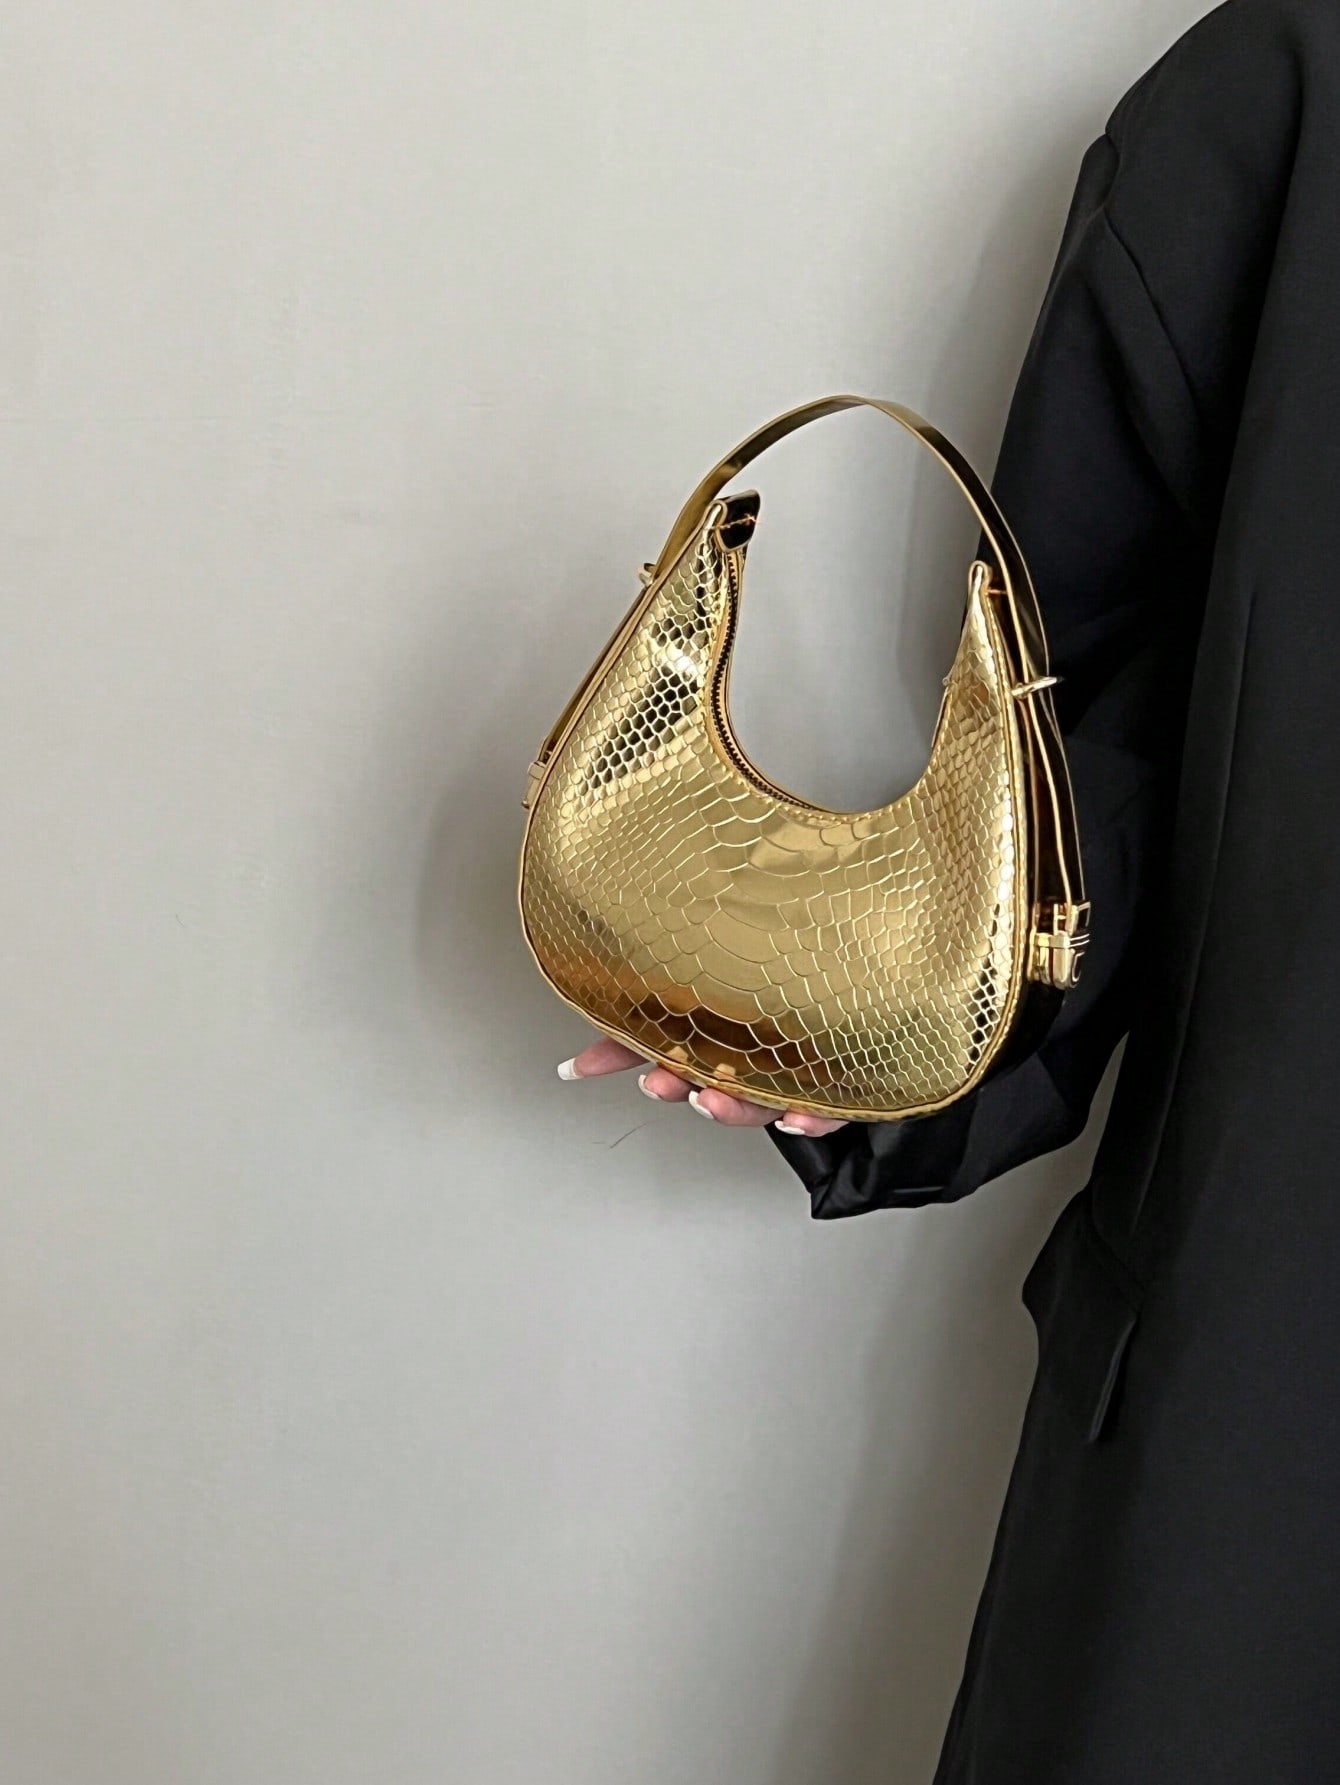 Мини-сумка-хобо из металлизированной змеиной кожи с тиснением в стиле фанк, золото